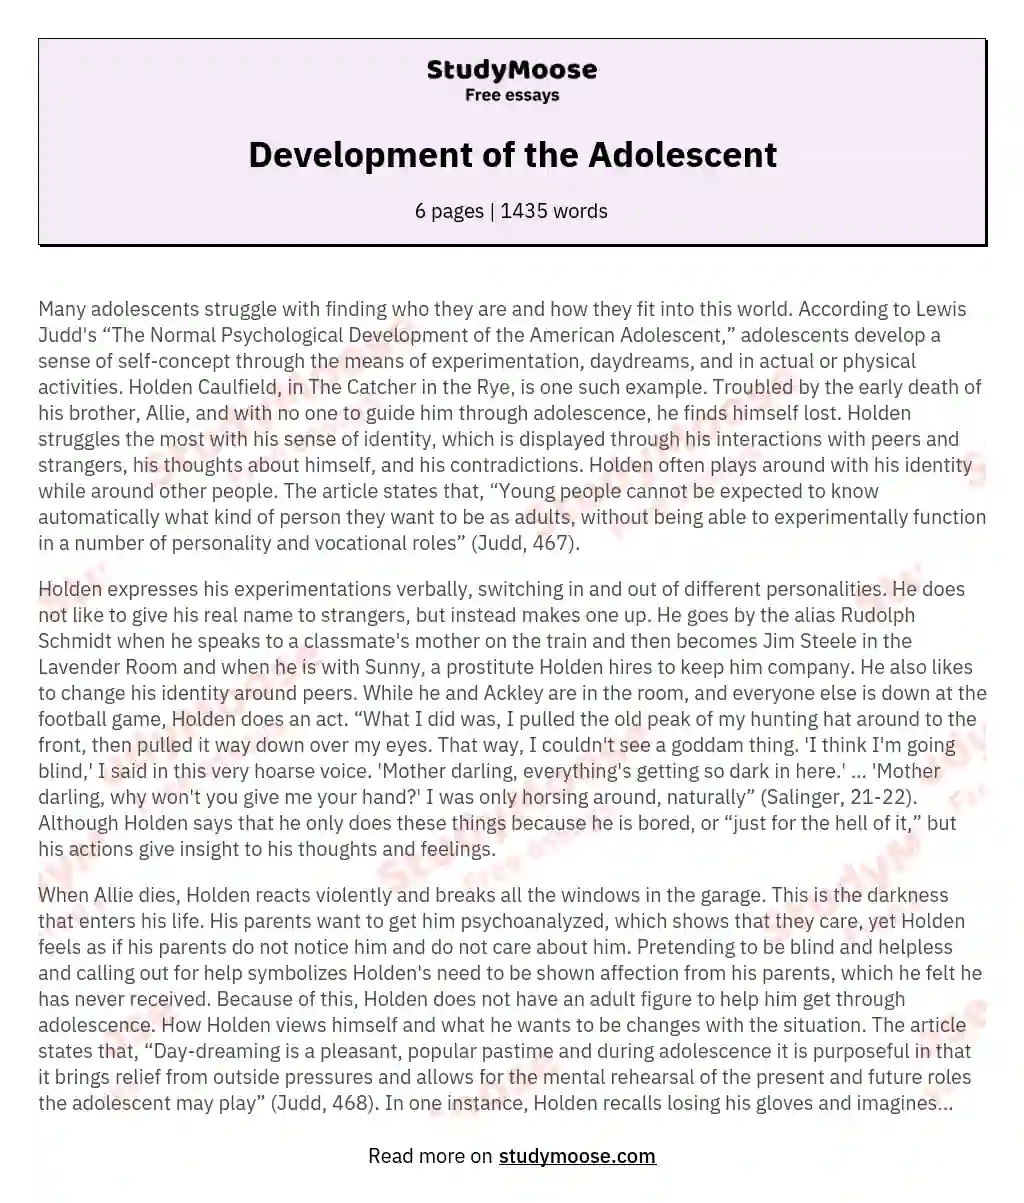 Development of the Adolescent essay